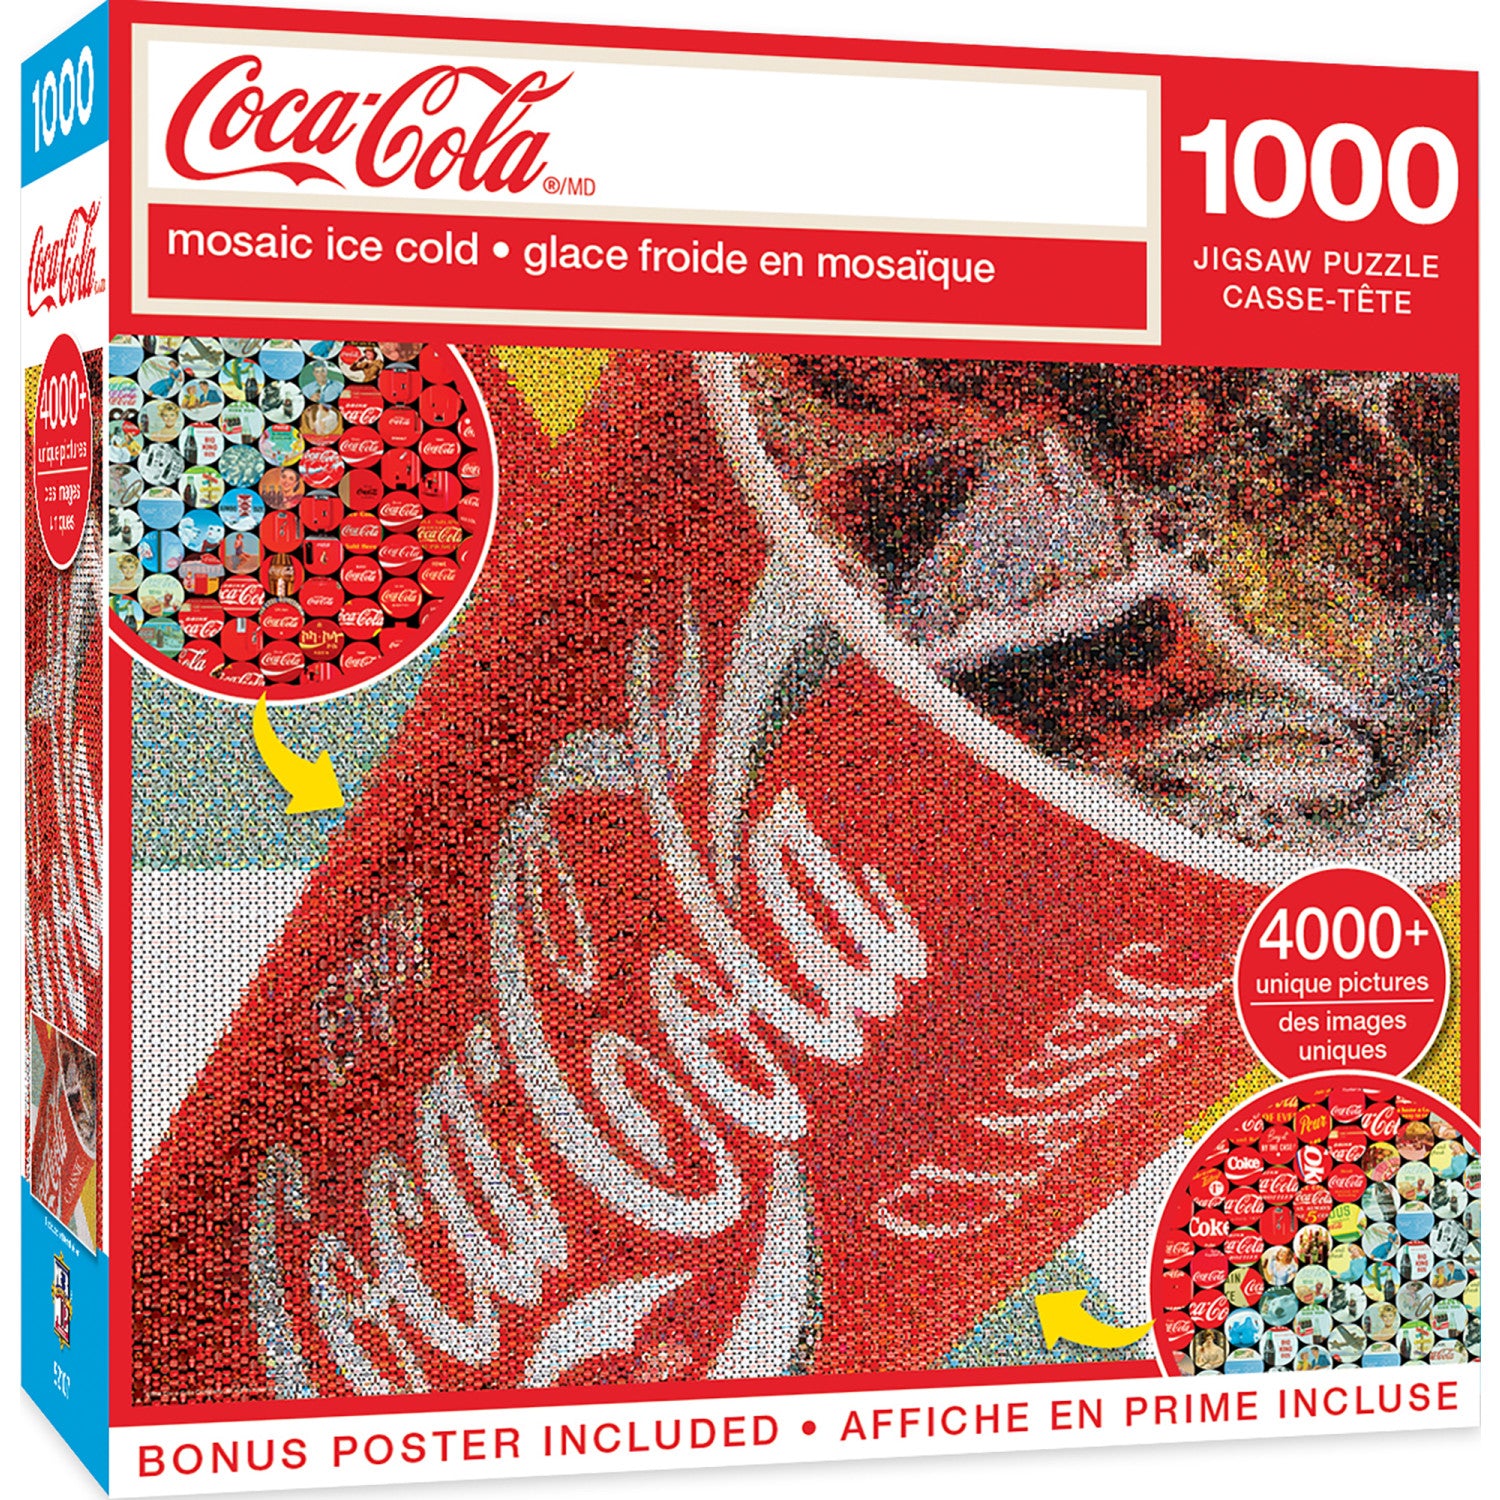 Coca-Cola - Photomosaic Big Gulp 1000 Piece Jigsaw Puzzle